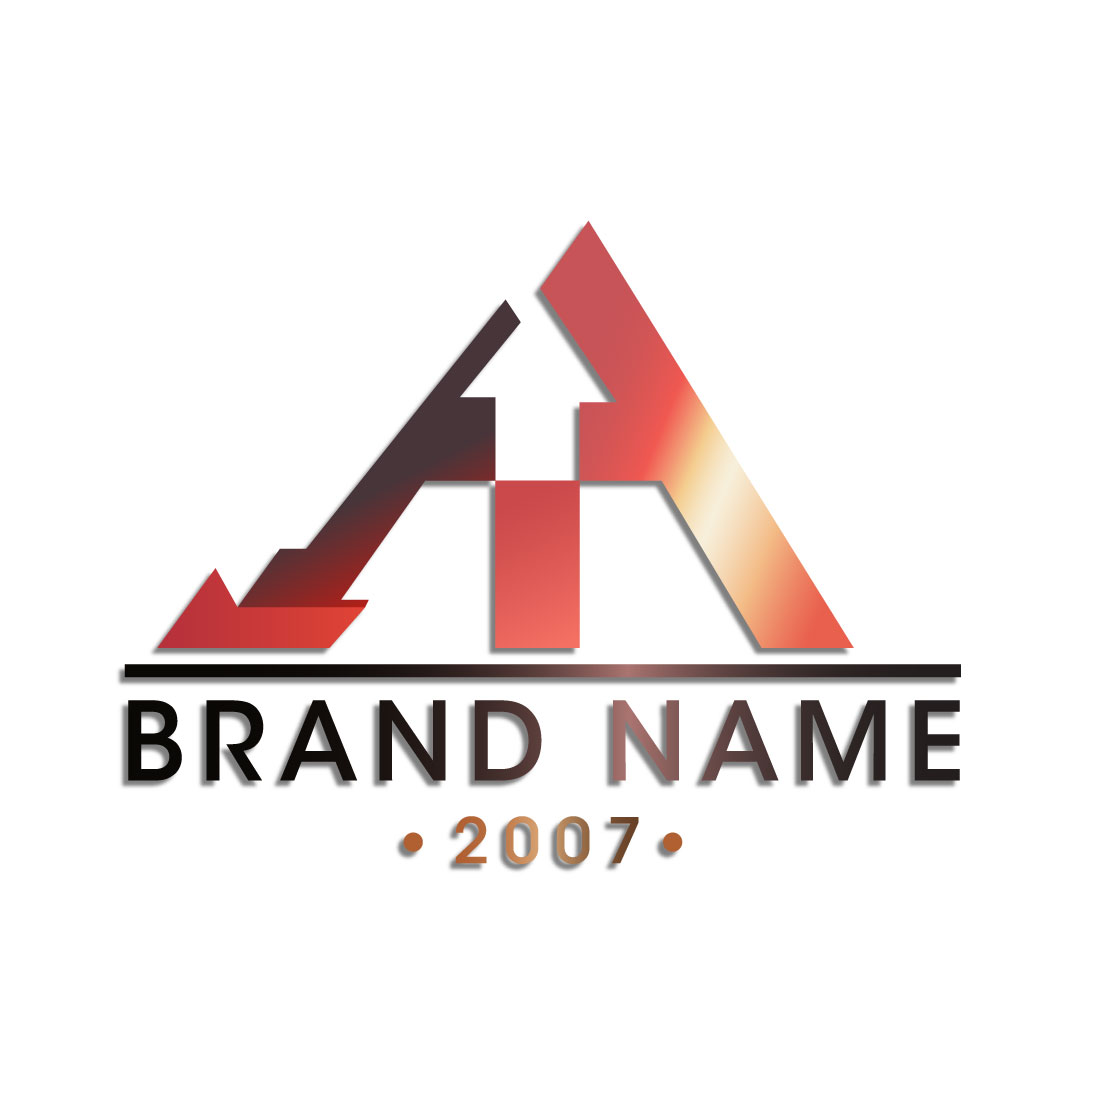 Company logo preview image.